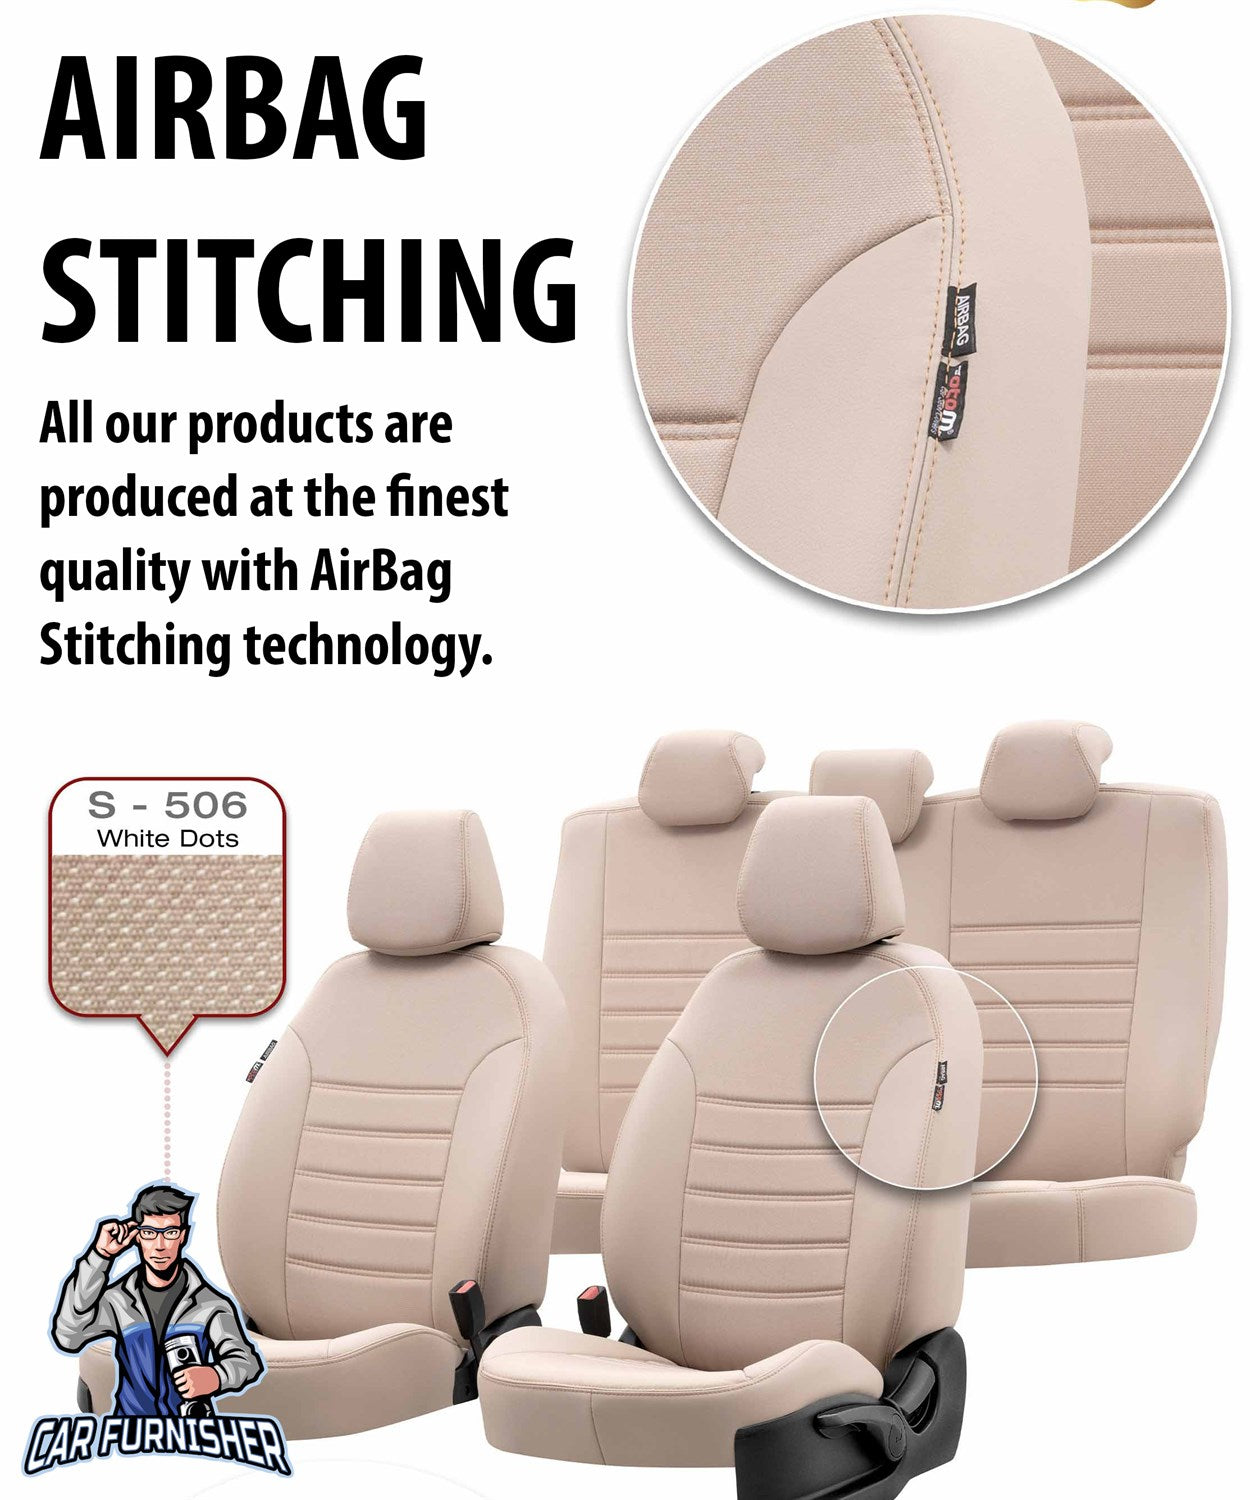 Nissan Pathfinder Seat Cover Paris Leather & Jacquard Design Beige Leather & Jacquard Fabric